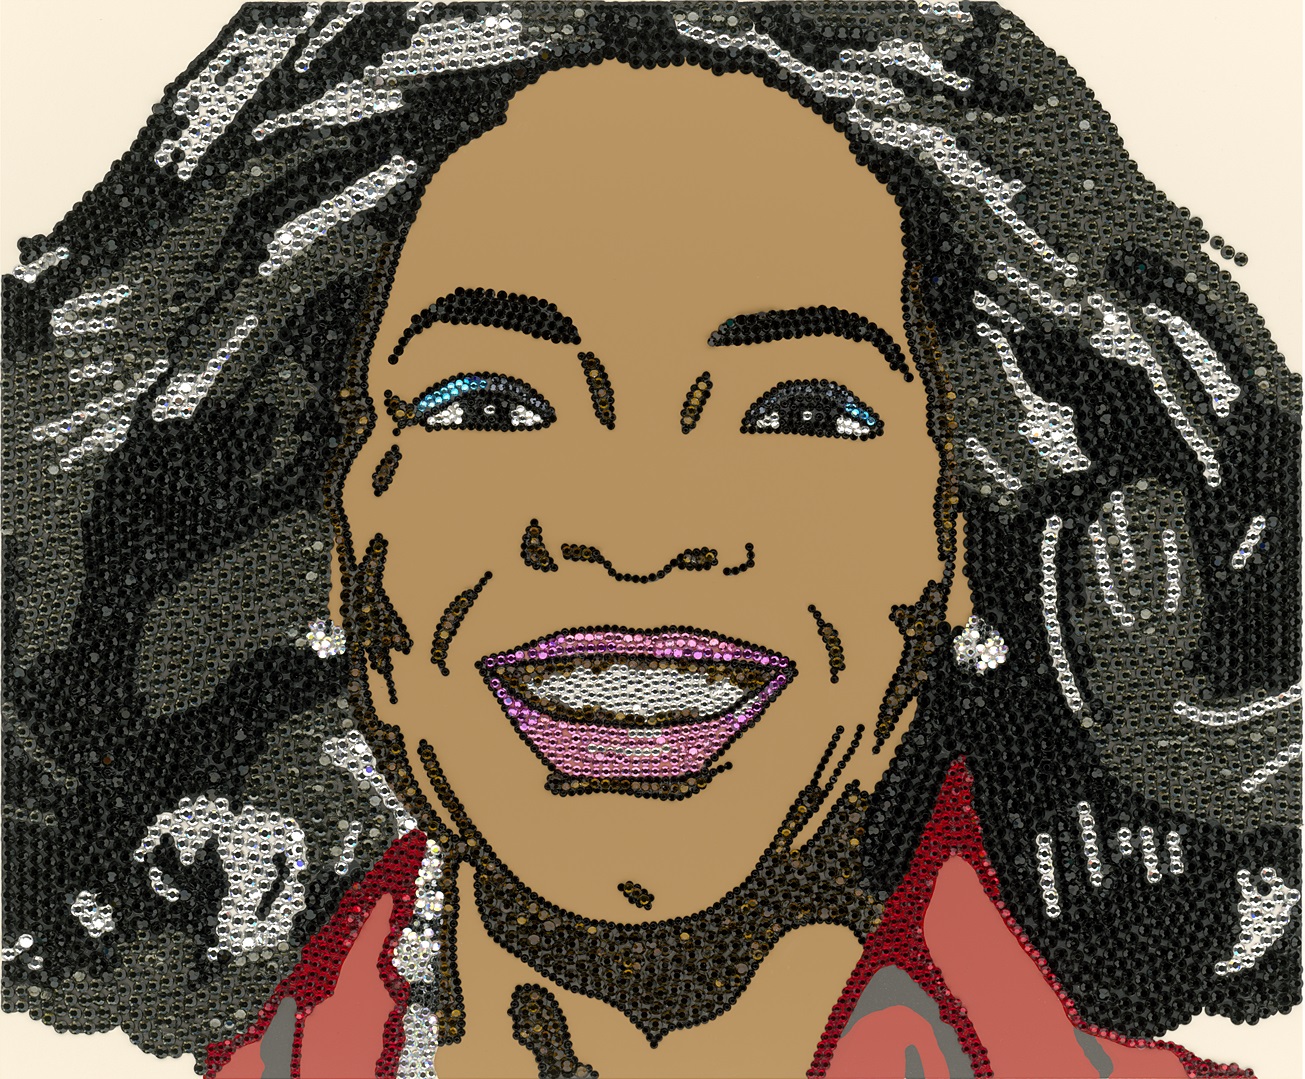 "Oprah Winfrey" by Mickalene Thomas